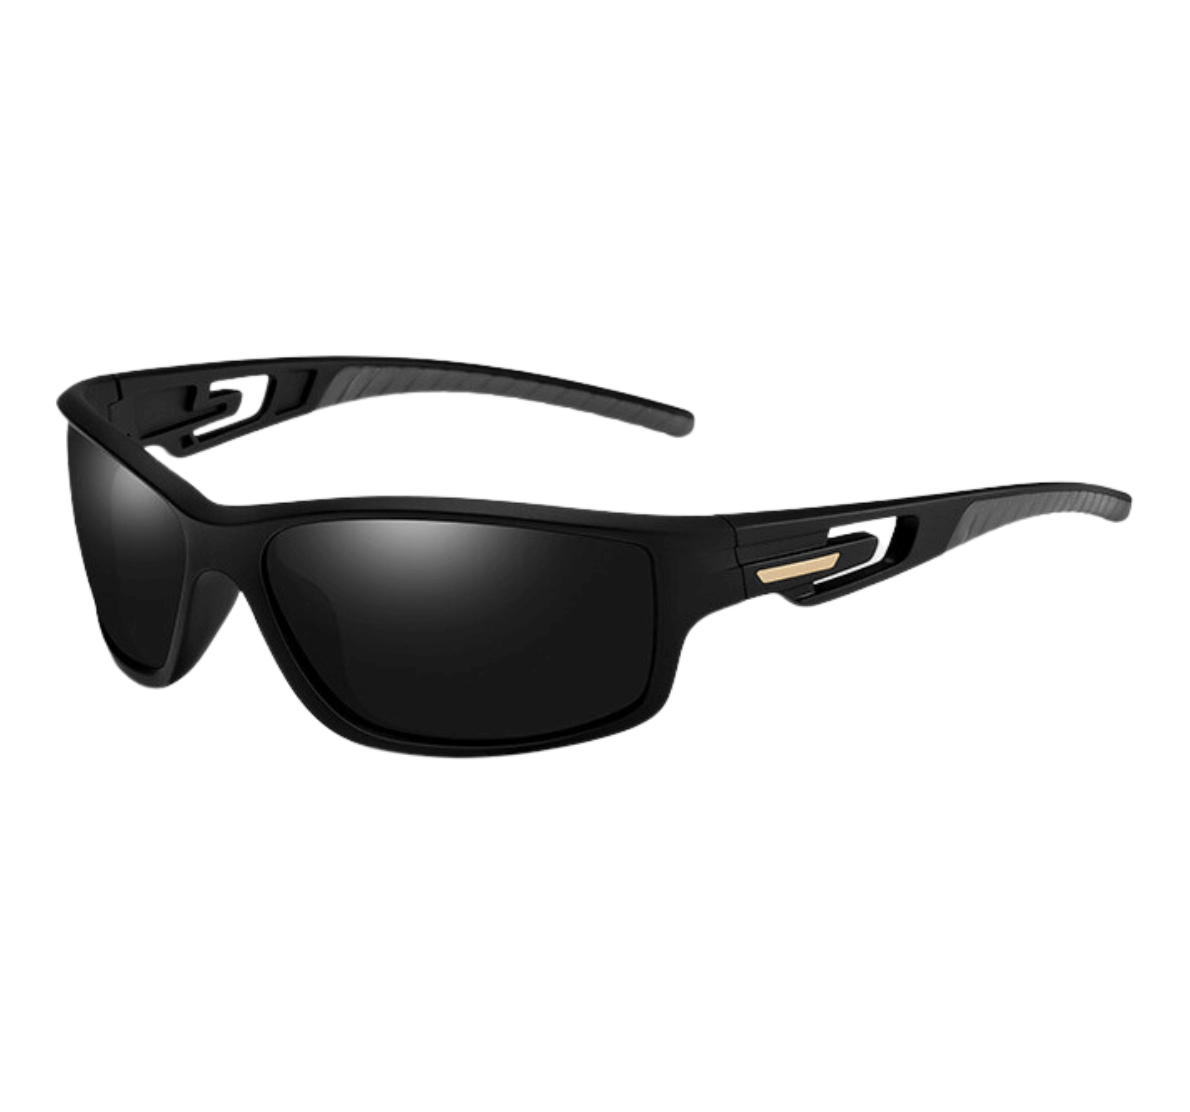 Custom Polarized Sunglasses, black polarized sport sunglasses, custom logo polarized sunglasses, custom sunglasses with logo, custom sunglasses manufacturers, Custom eyewear manufacturers